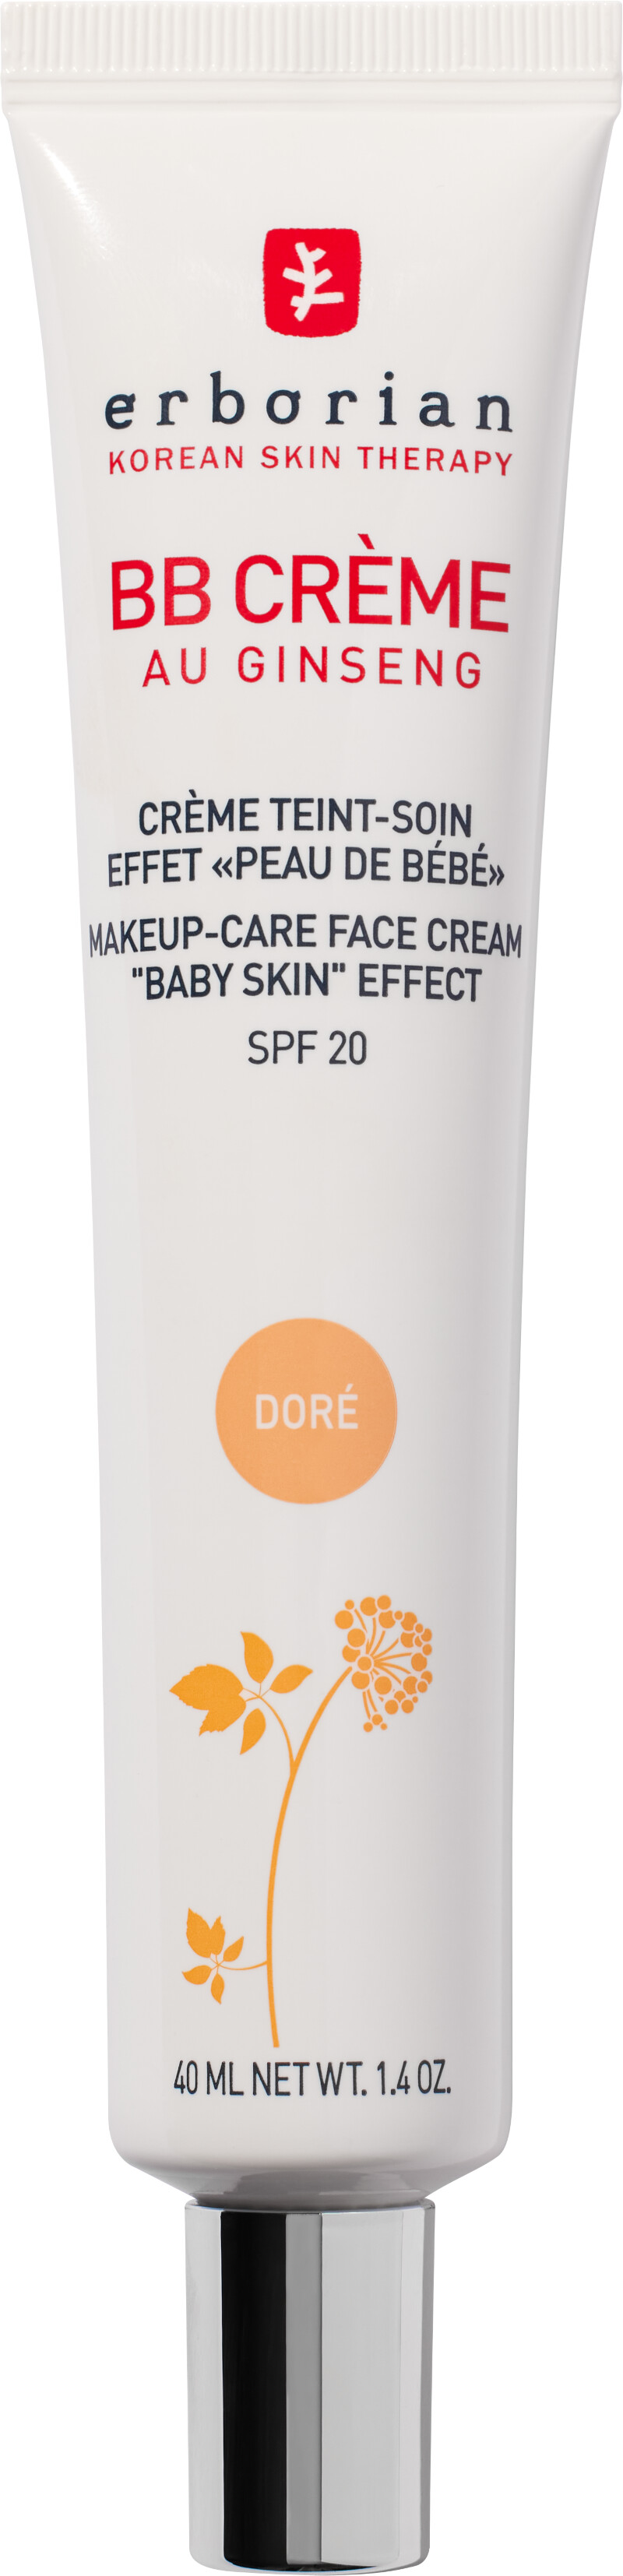 Erborian Bb Creme 'Baby Skin' Effect Make-Up-Care Face Cream 5-In-1 SPF20 40ml Dore